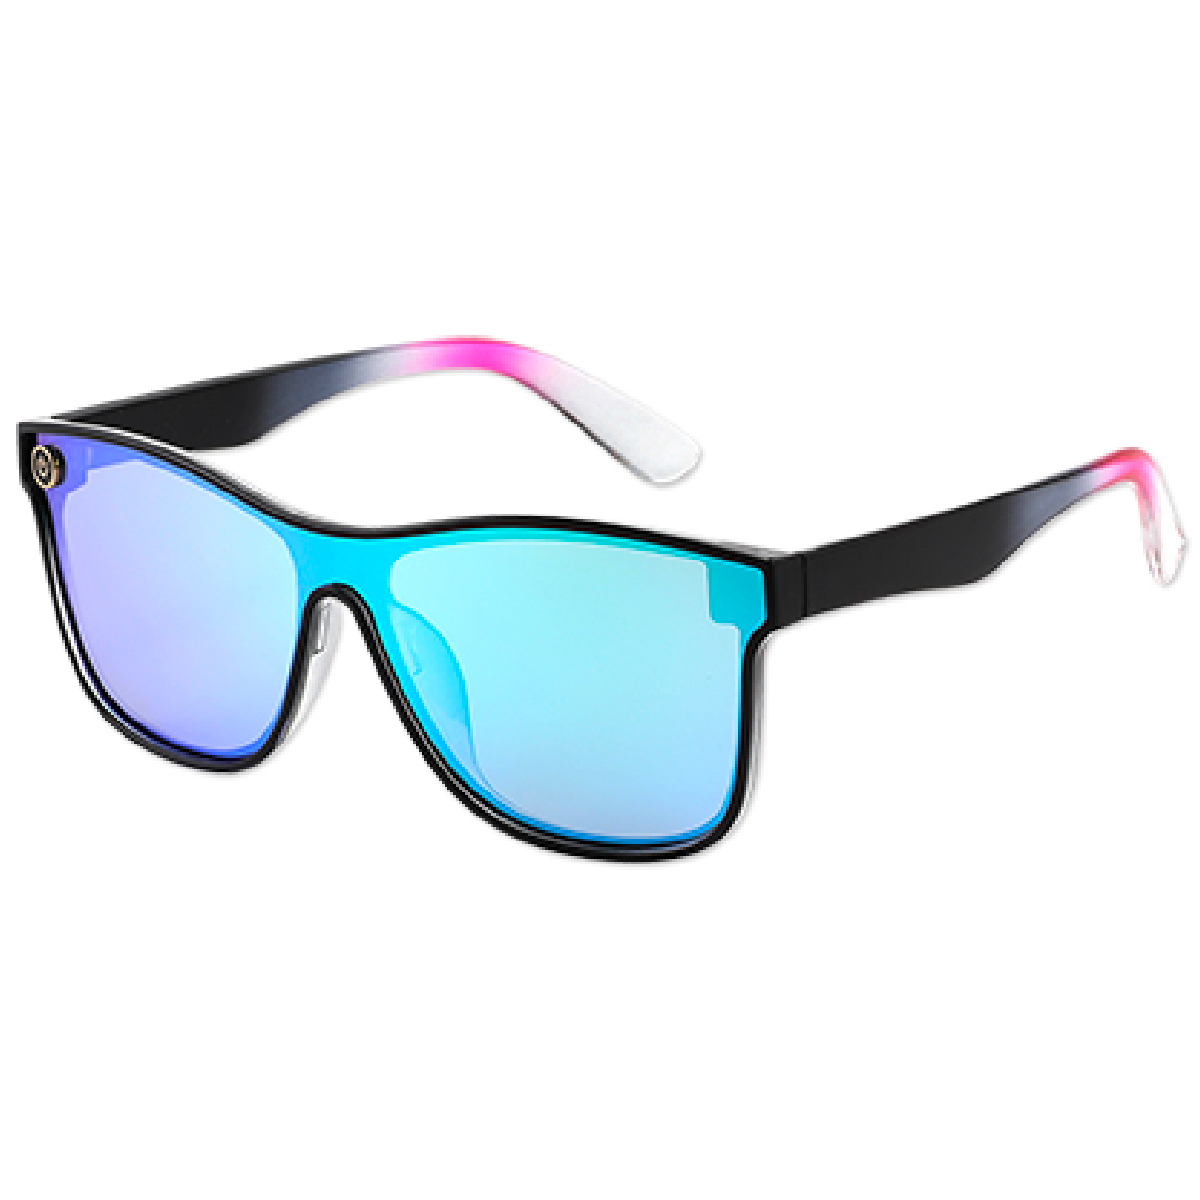 Ombre/Blue Ombre with Blue Lens Mixer Sunglasses